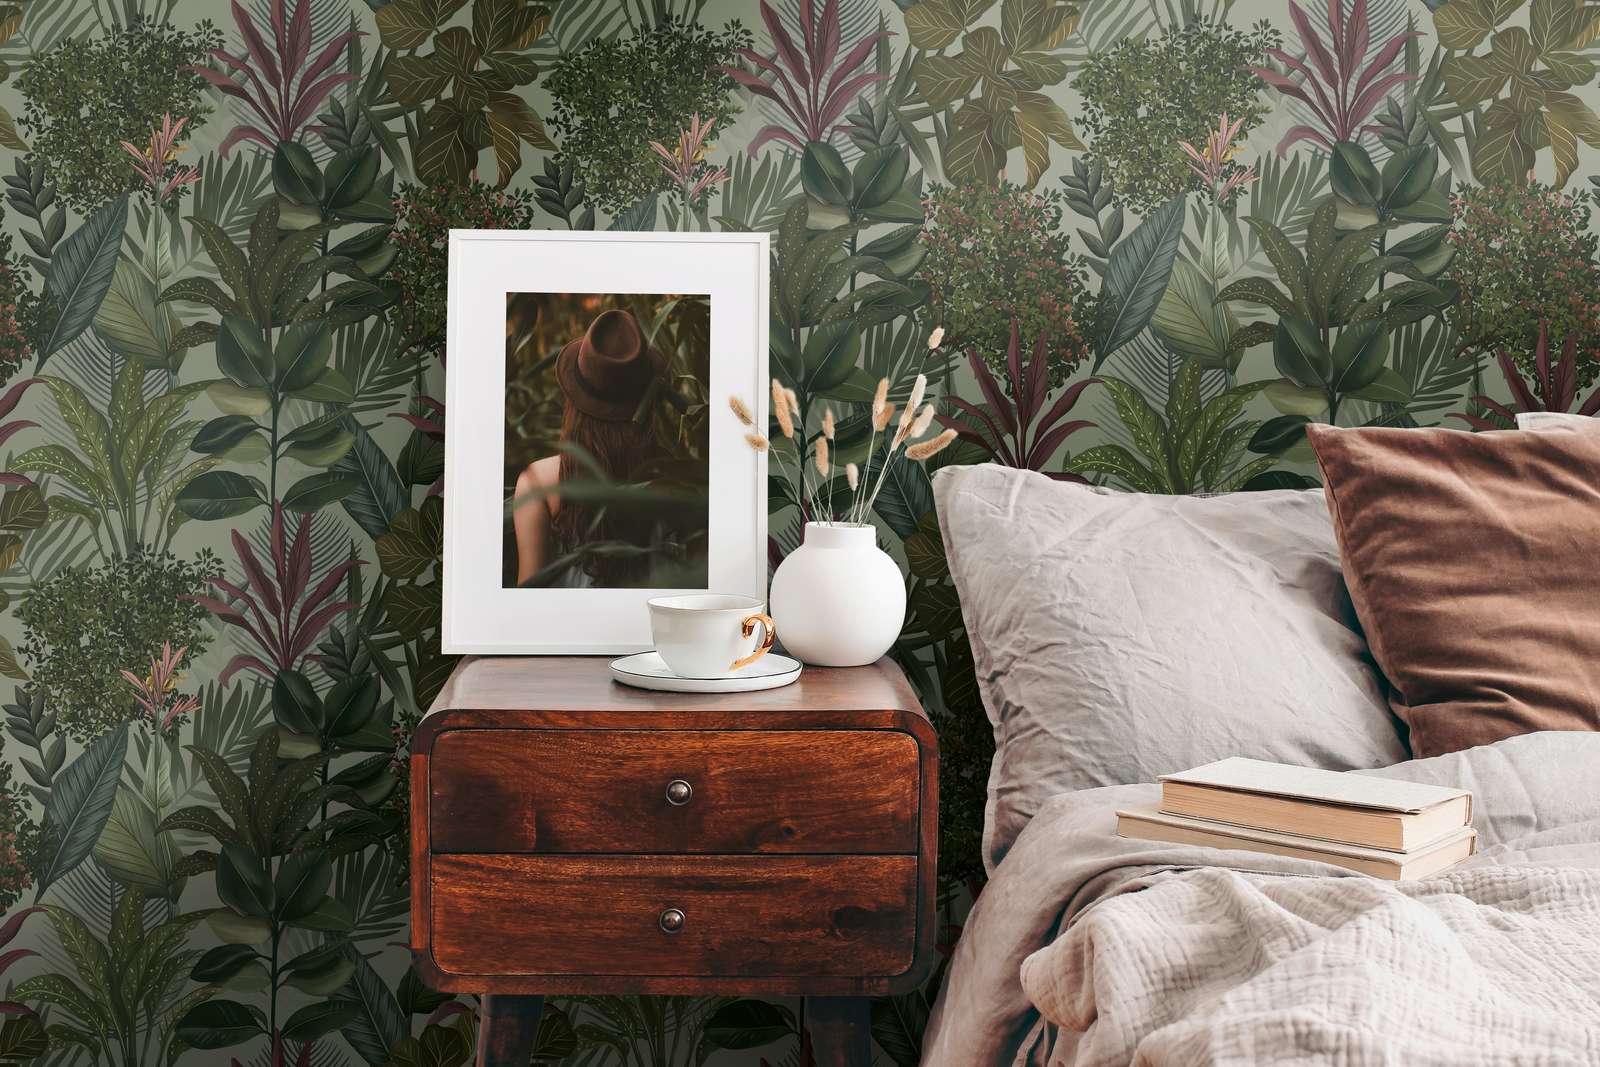             Modern wallpaper floral with leaves & grasses textured matt - green, dark green, bordeaux
        